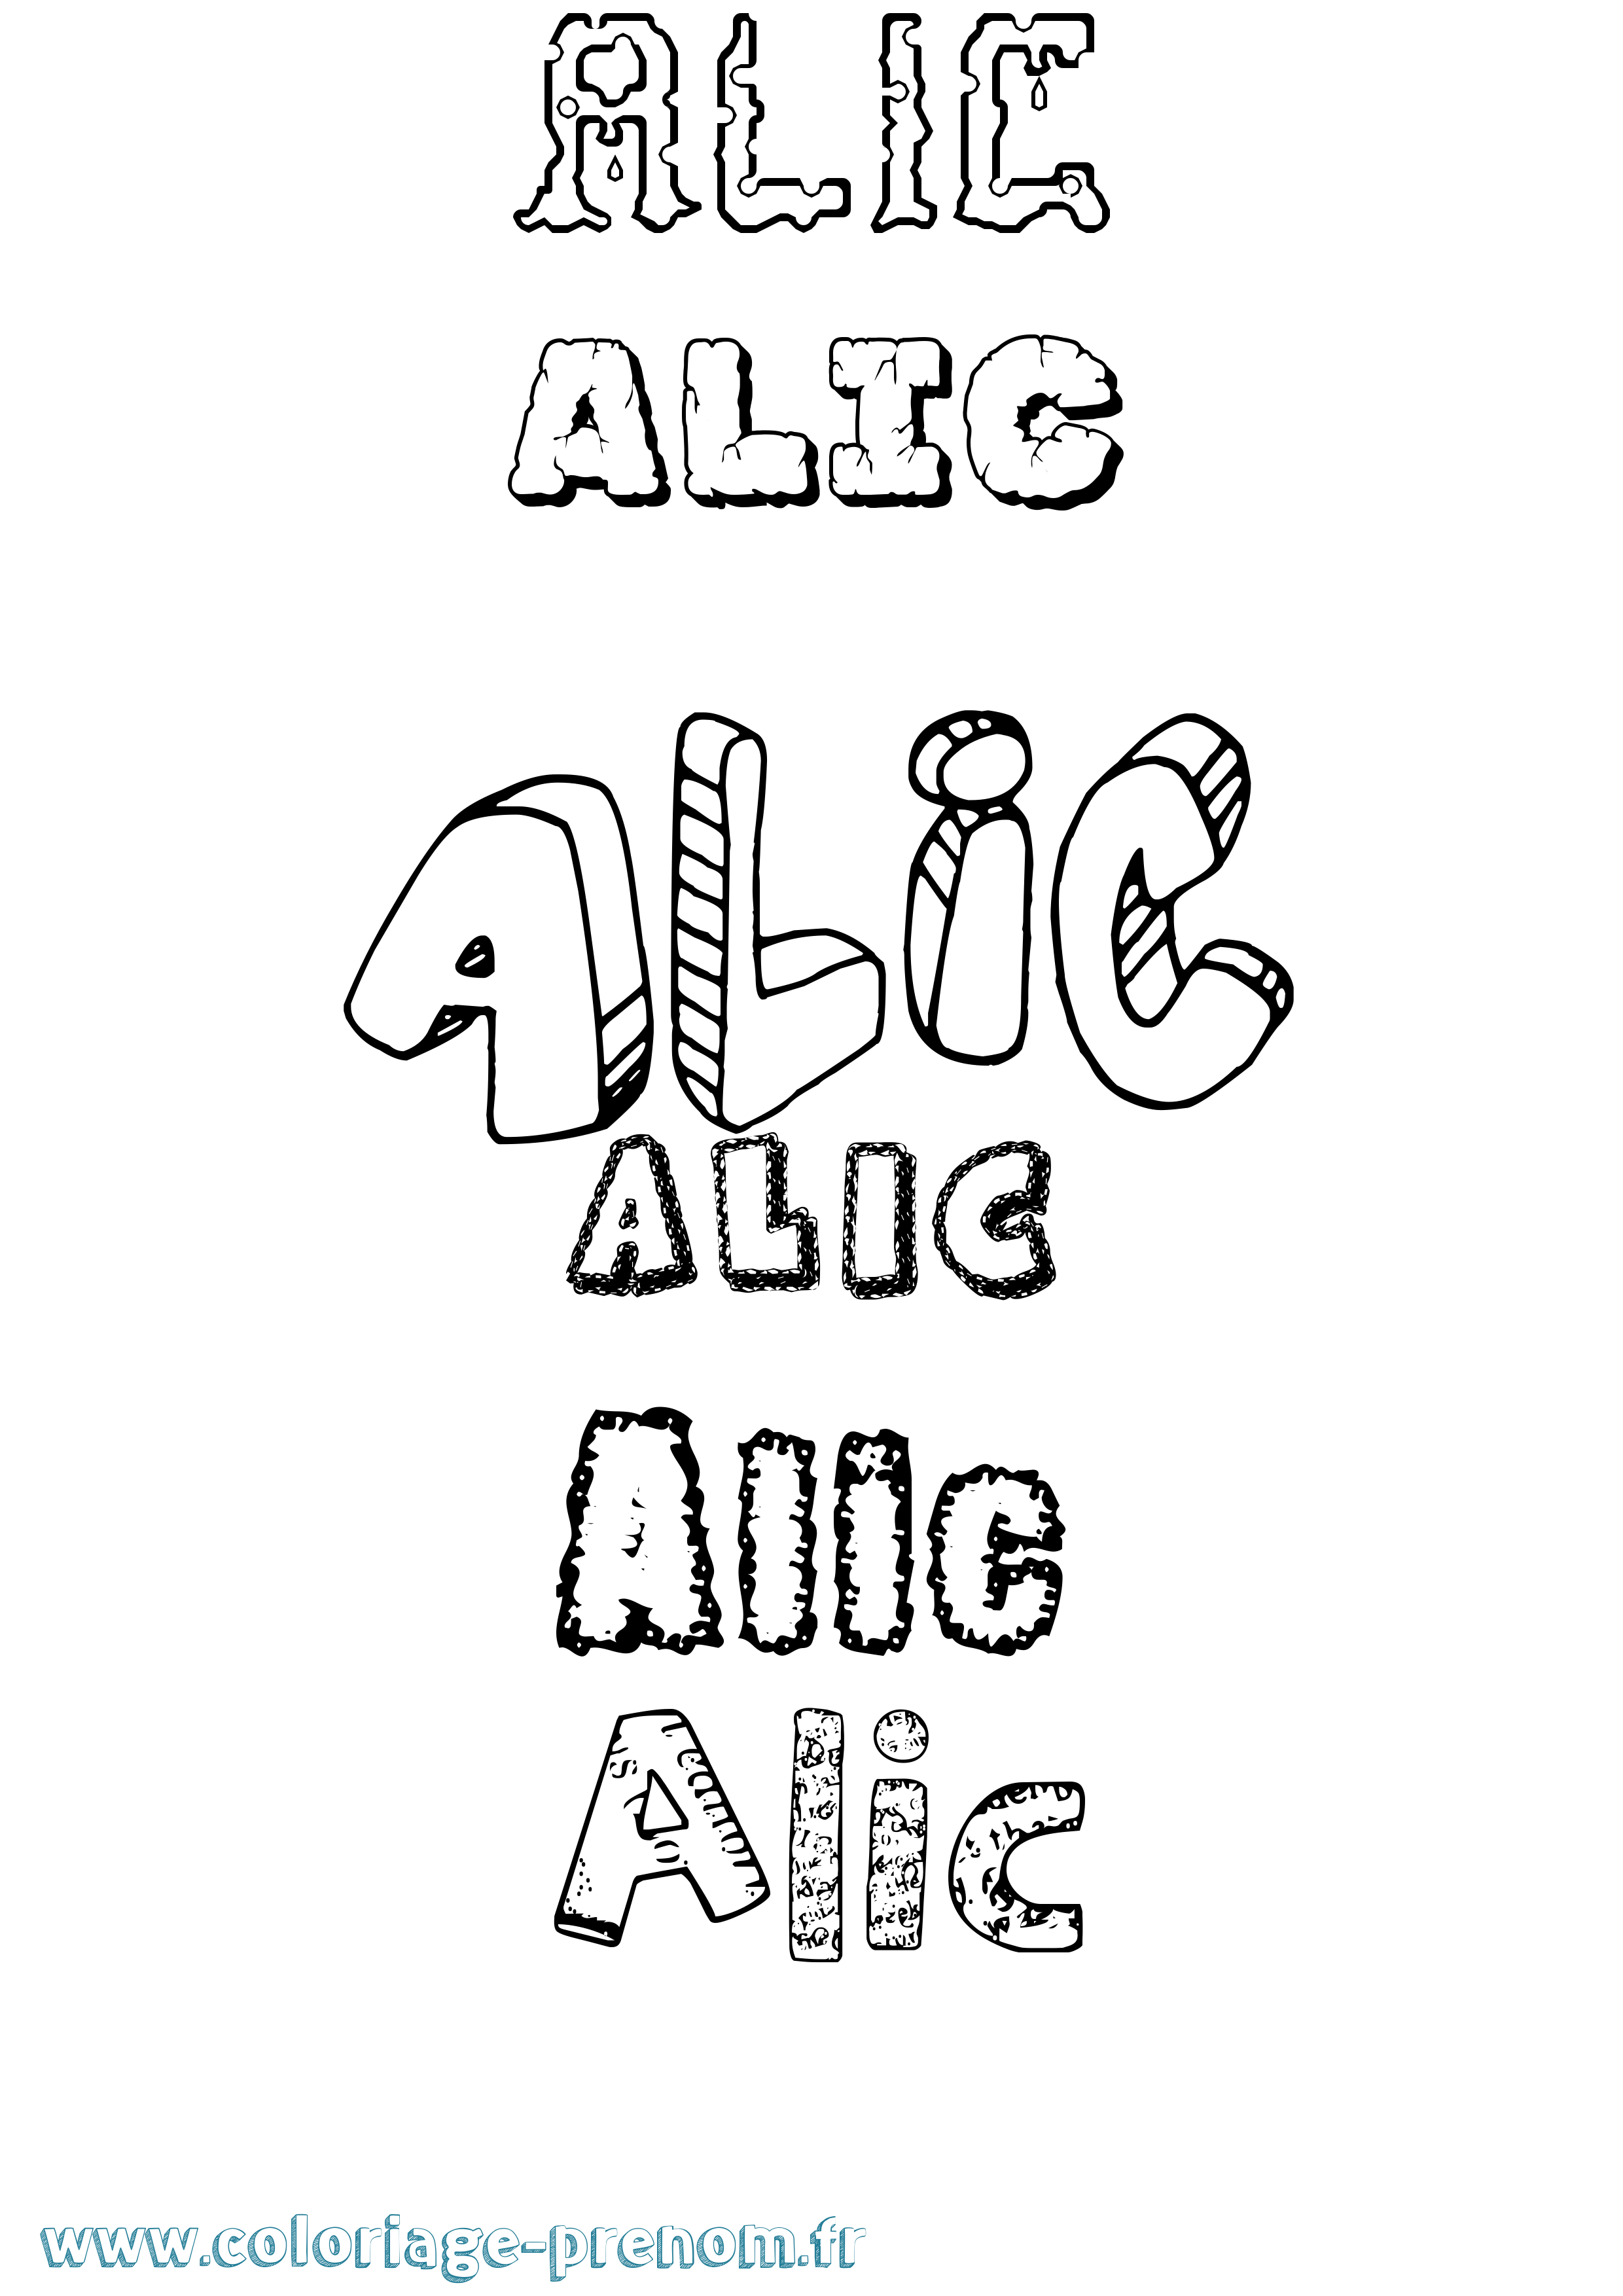 Coloriage prénom Alic Destructuré